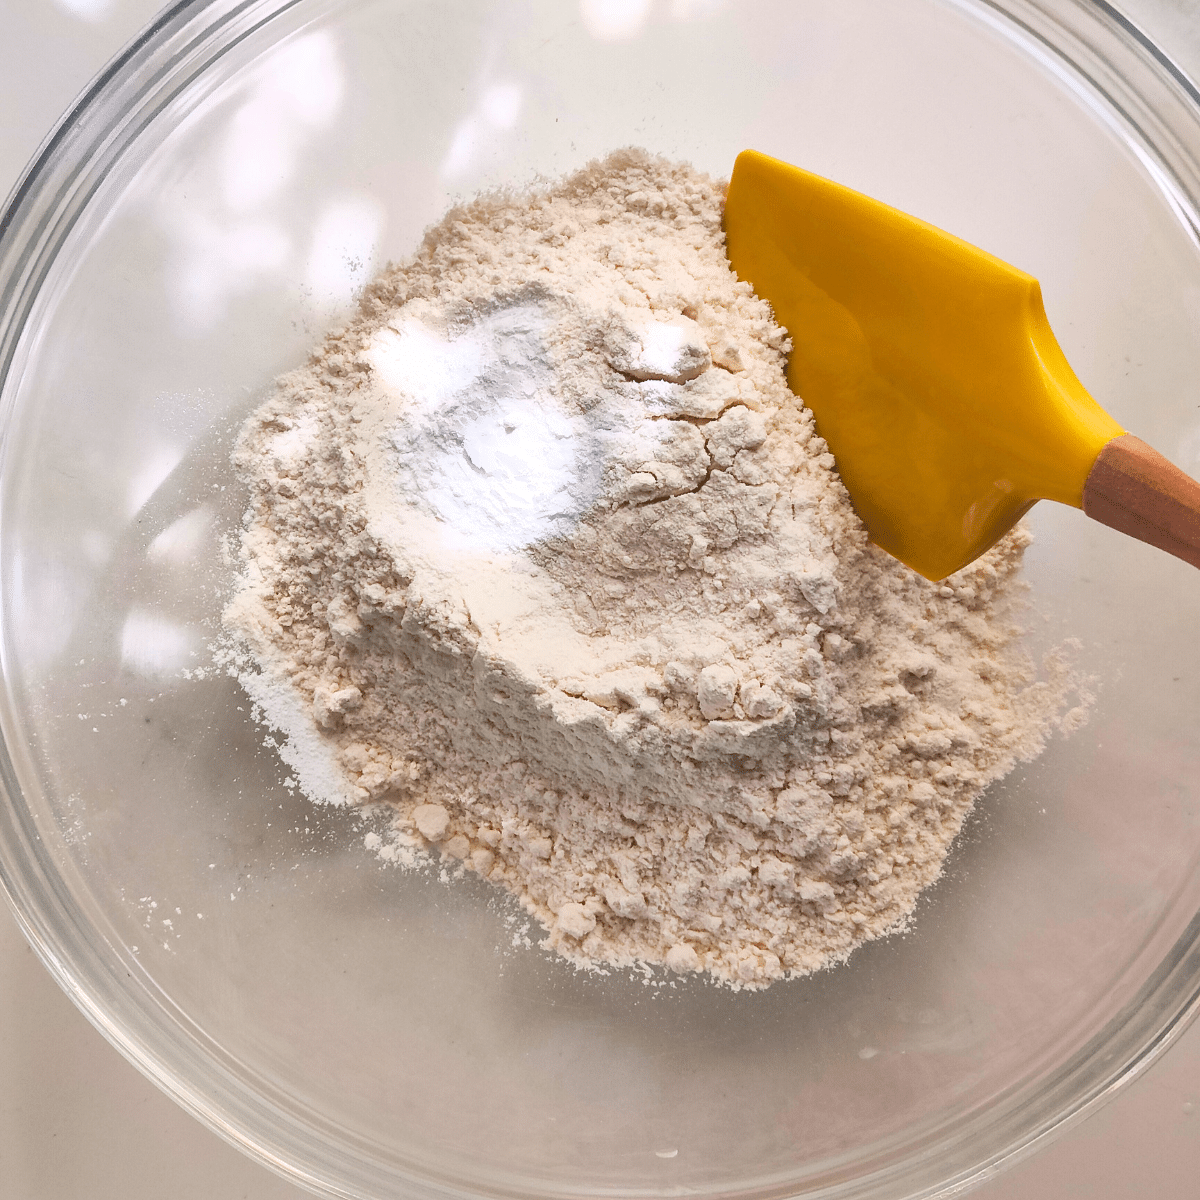 Flour baking powder mixture